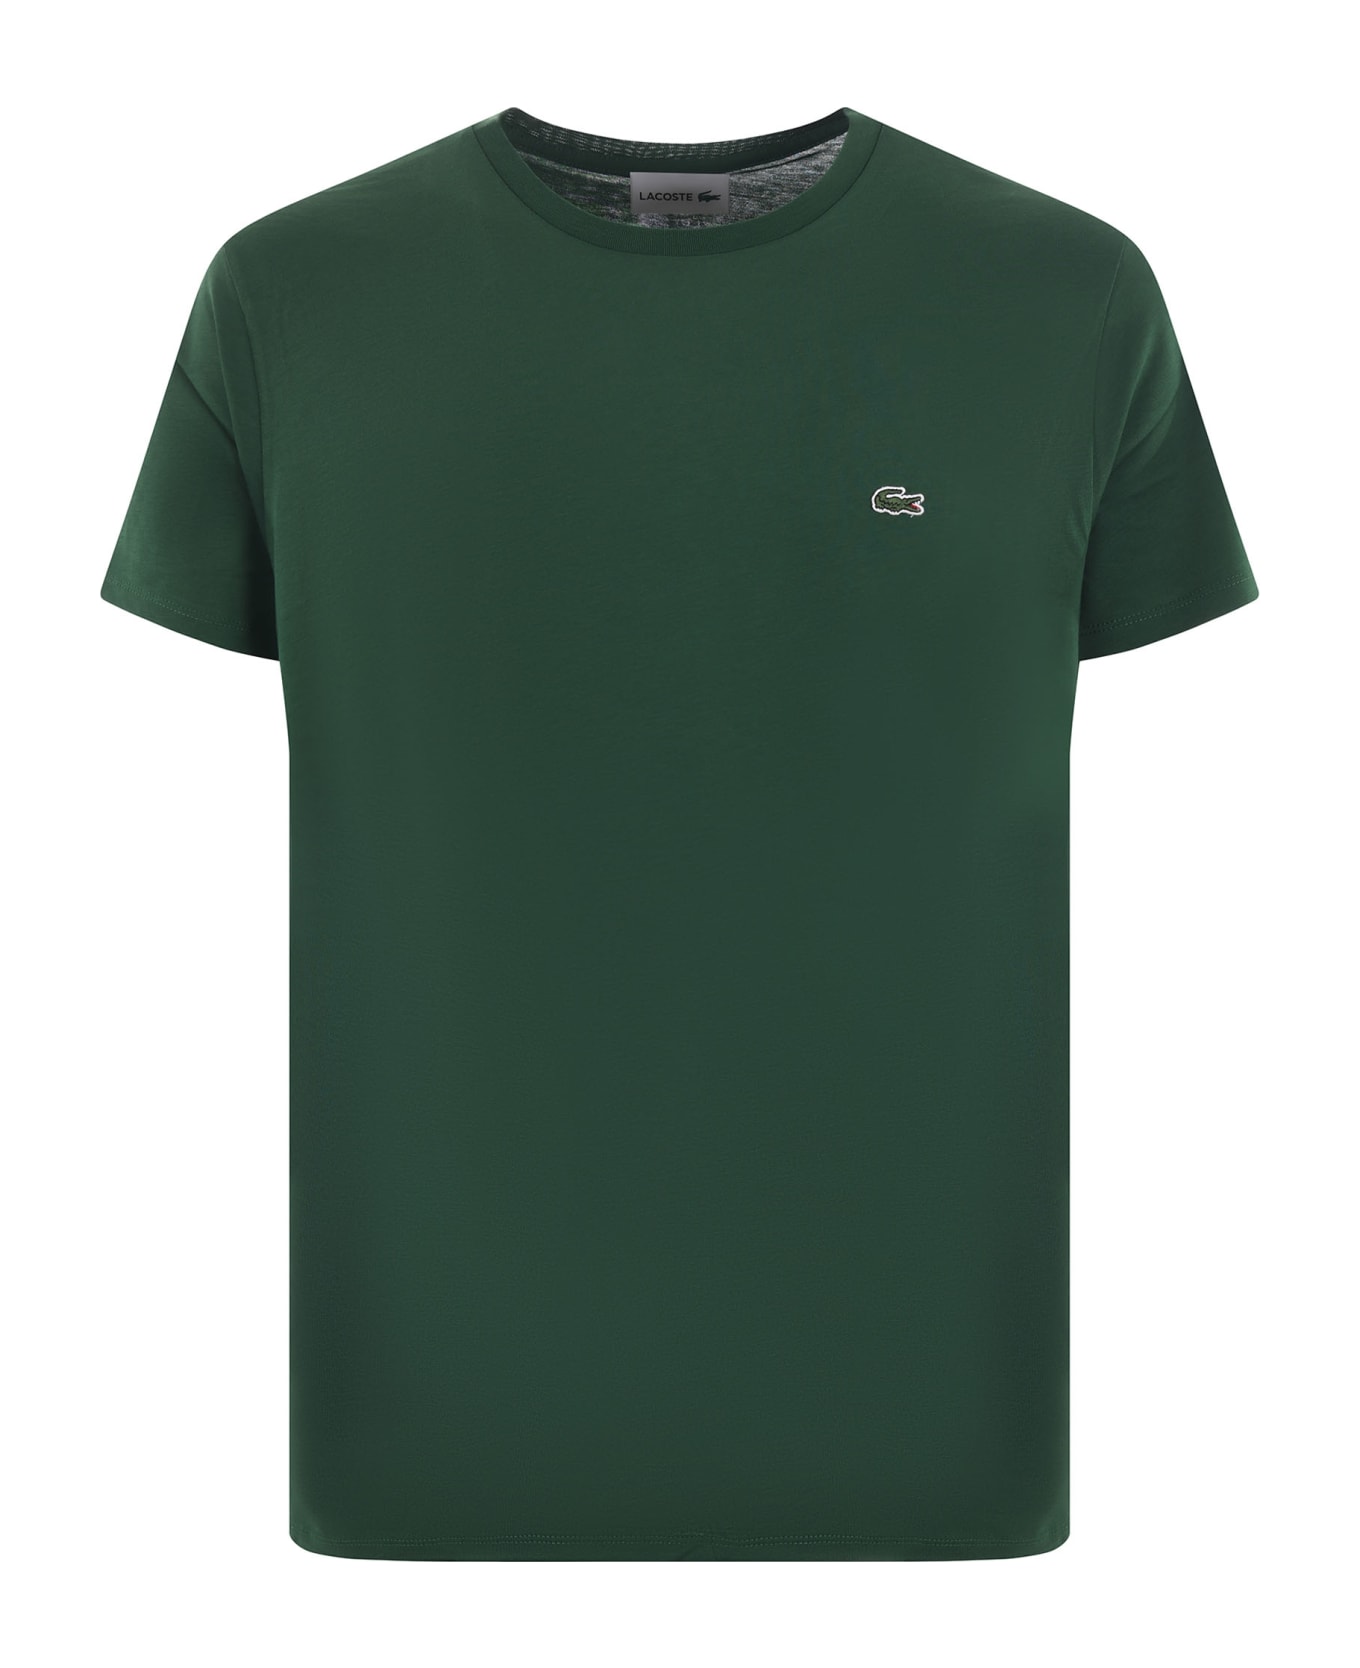 Lacoste Pima Cotton T-shirt - Verde militare